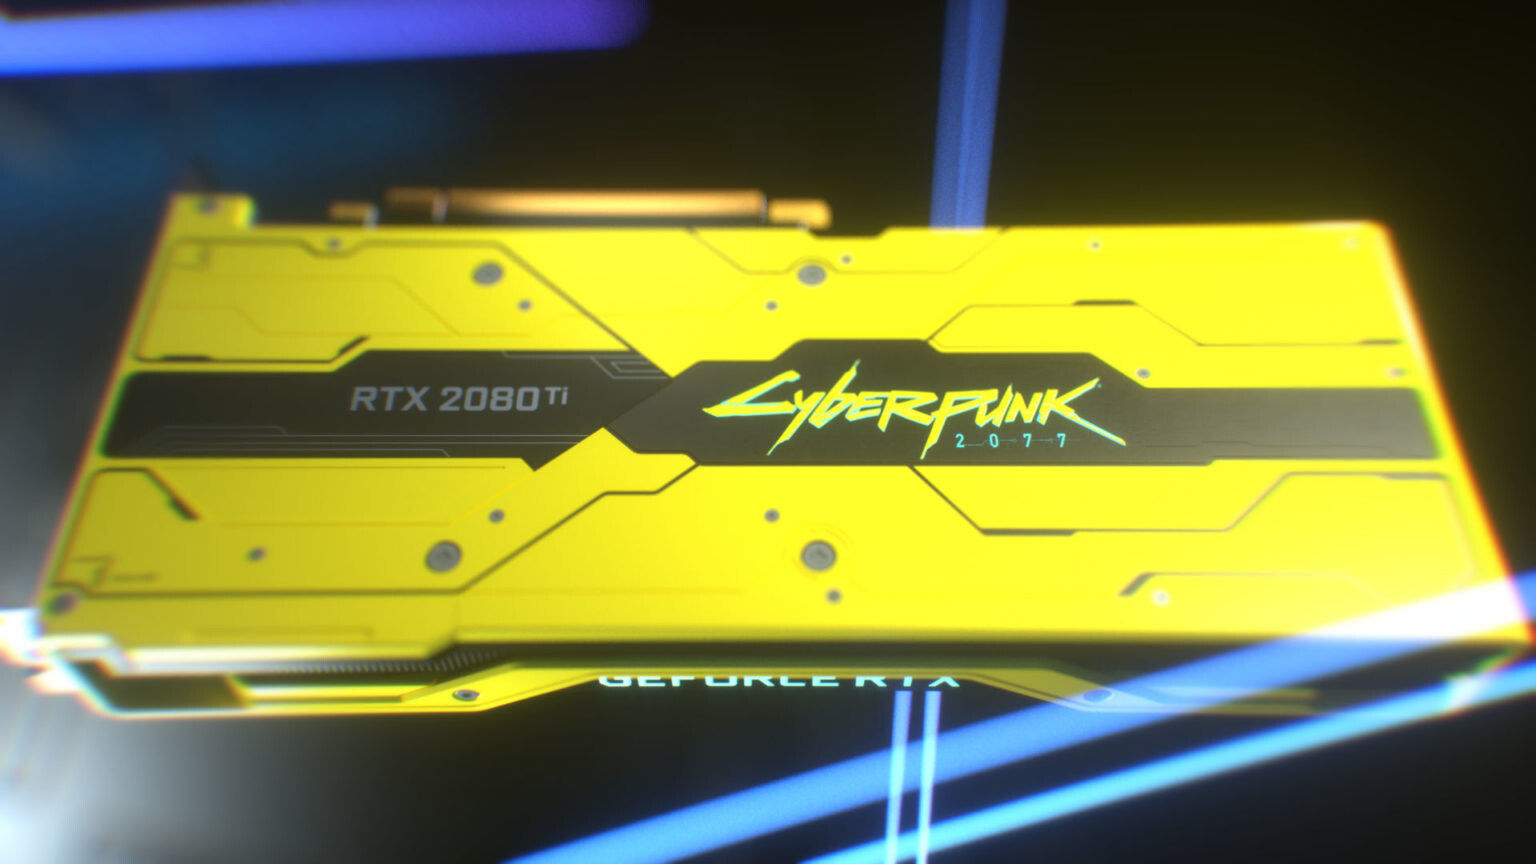 More information about "H Nvidia επισήμως ανακοινώνει τις GeForce RTX 2080 Ti "Cyberpunk 2077 Edition" και κληρώνει κάποιες από αυτές σε διαγωνισμό!"